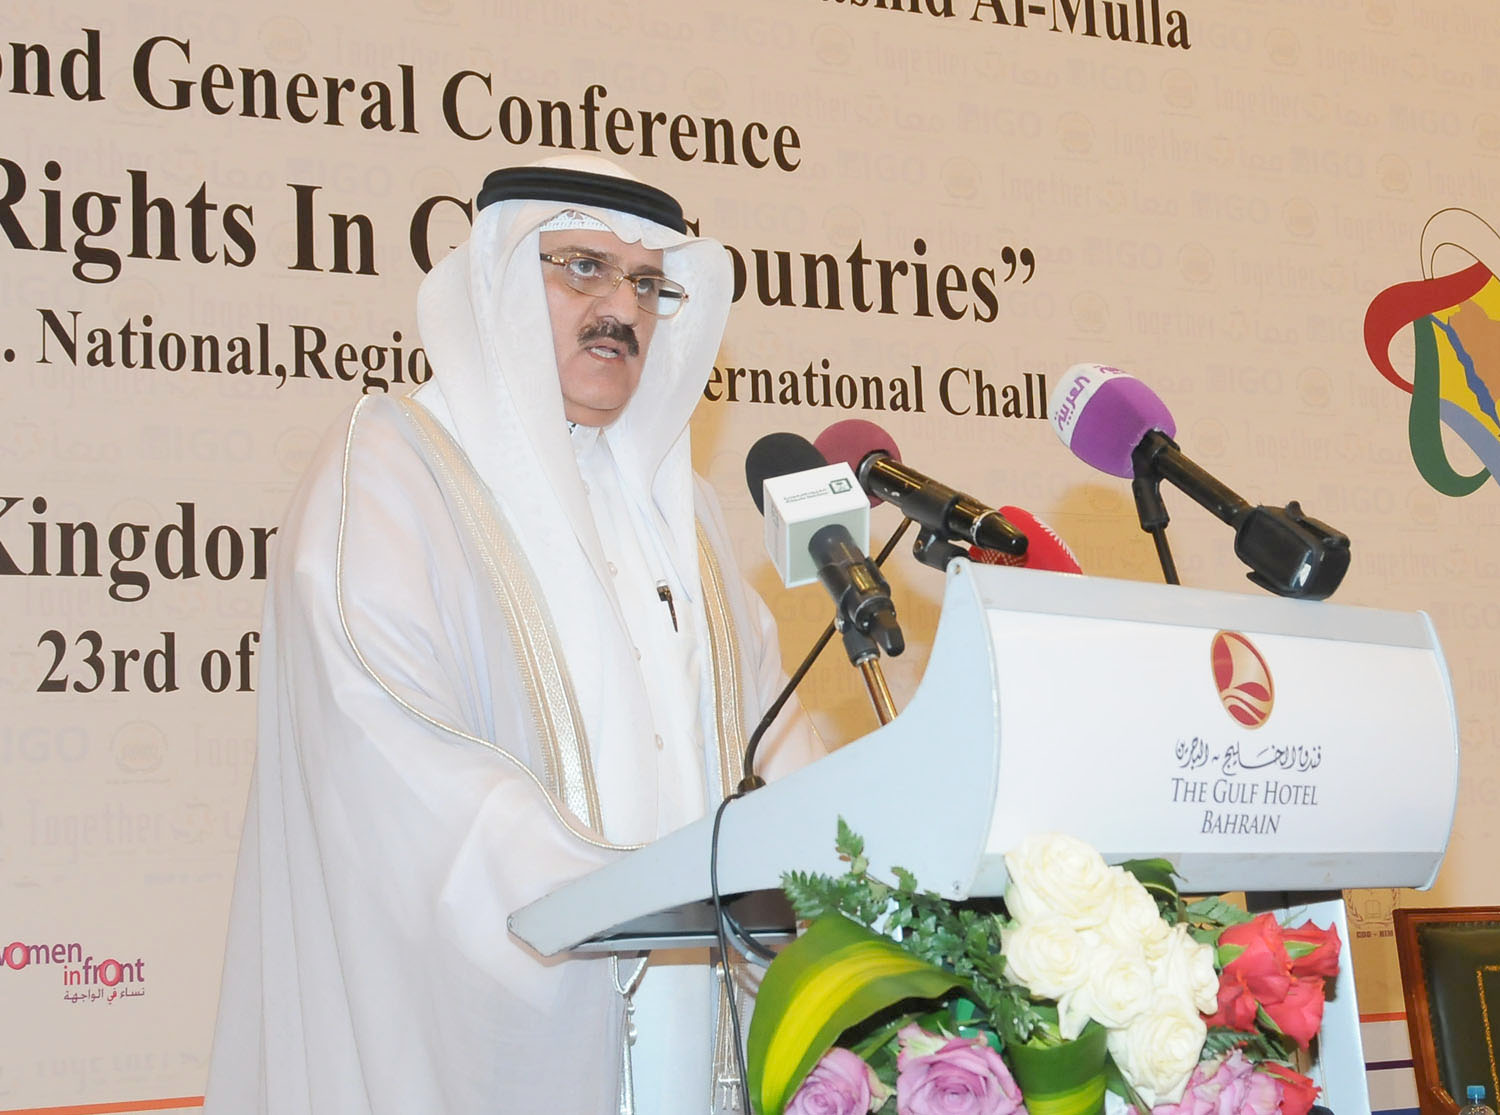 Bahrain's parliament speaker Ahmad bin Ibrahim Al-Mulla